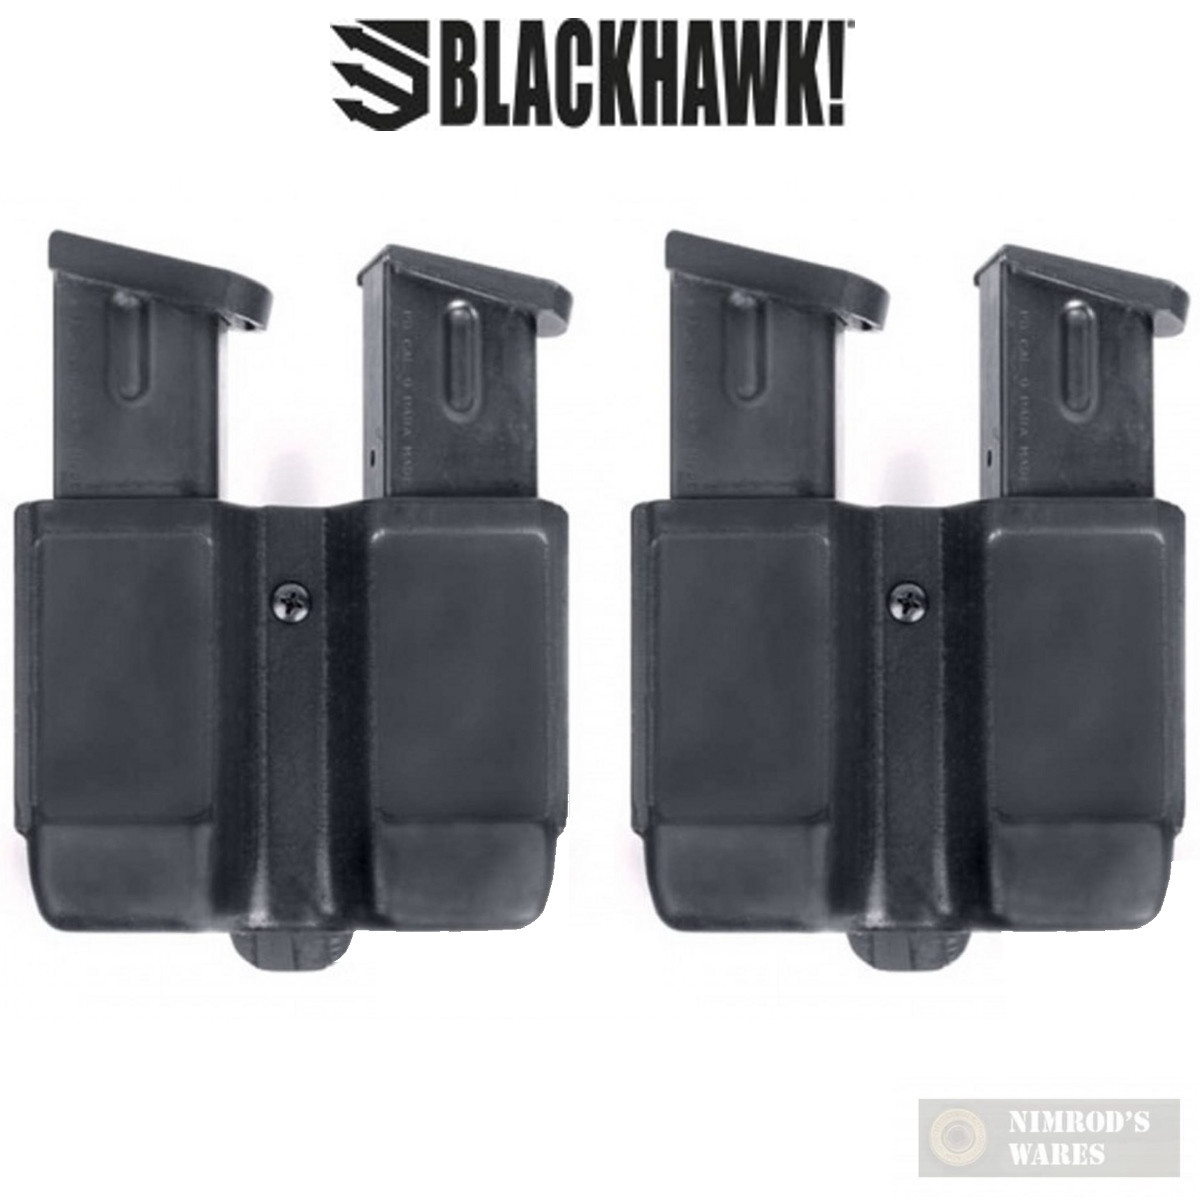 Blackhawk Modular 410510PBK Double Mag Case Single Stack Polymer for sale online 